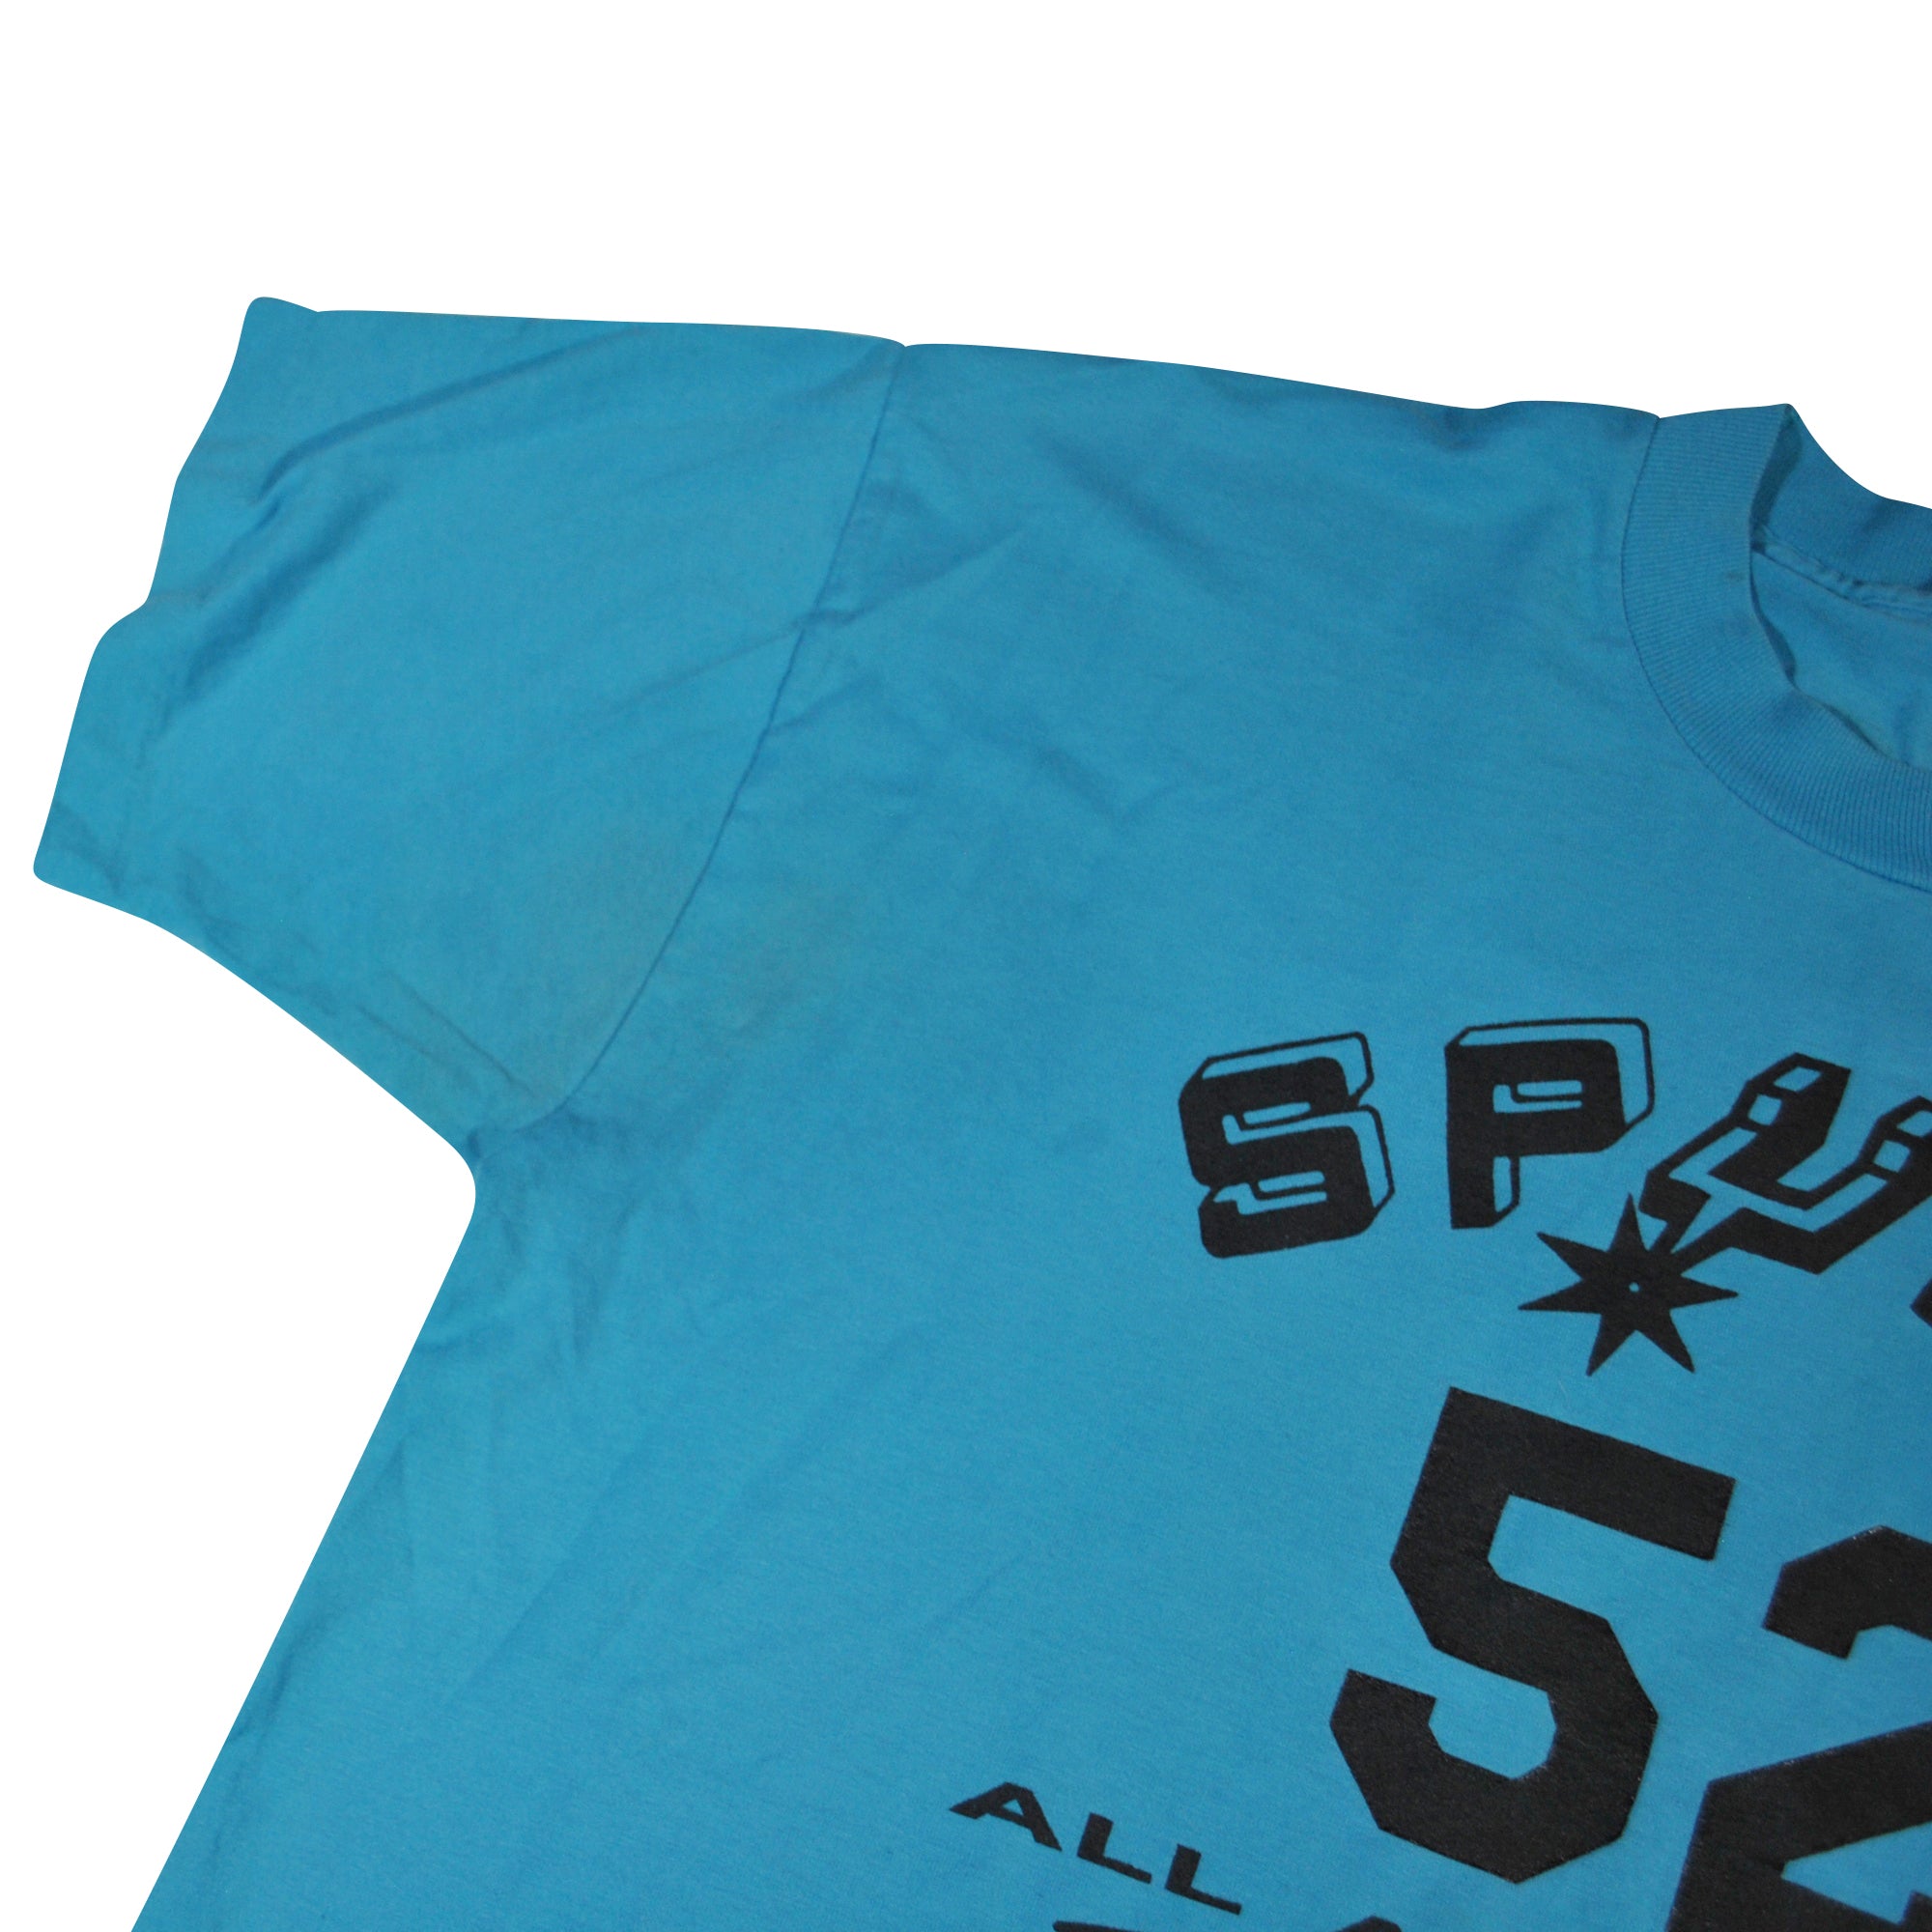 Vintage San Antonio Spurs Sponsor Shirt Size X-Large – Yesterday's Attic